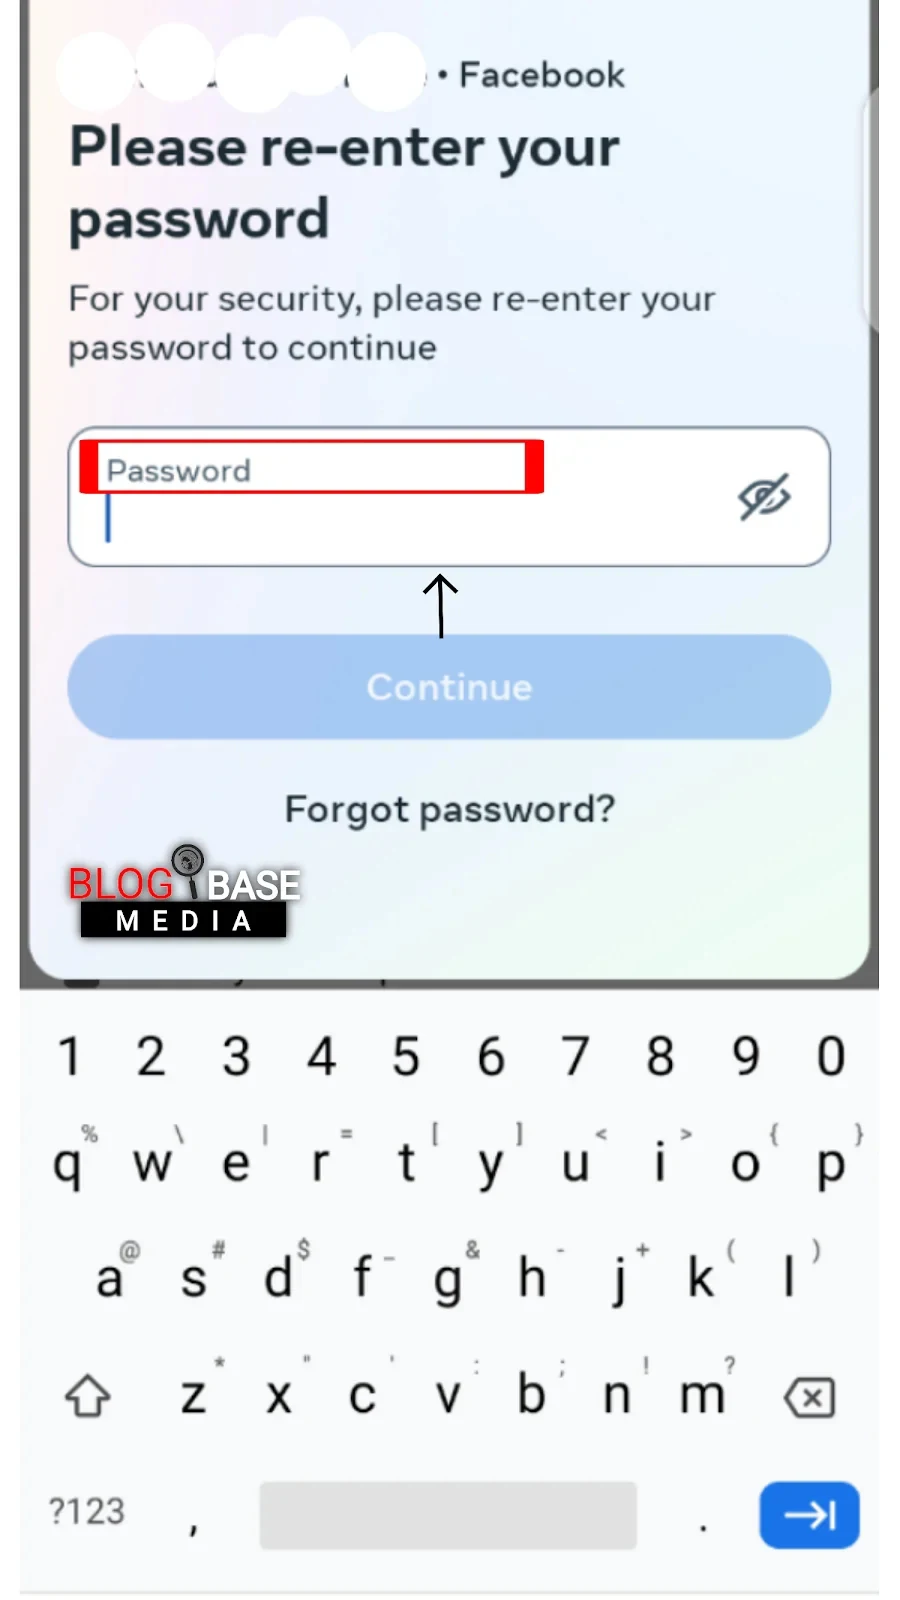 Facebook password confirmation page screenshot